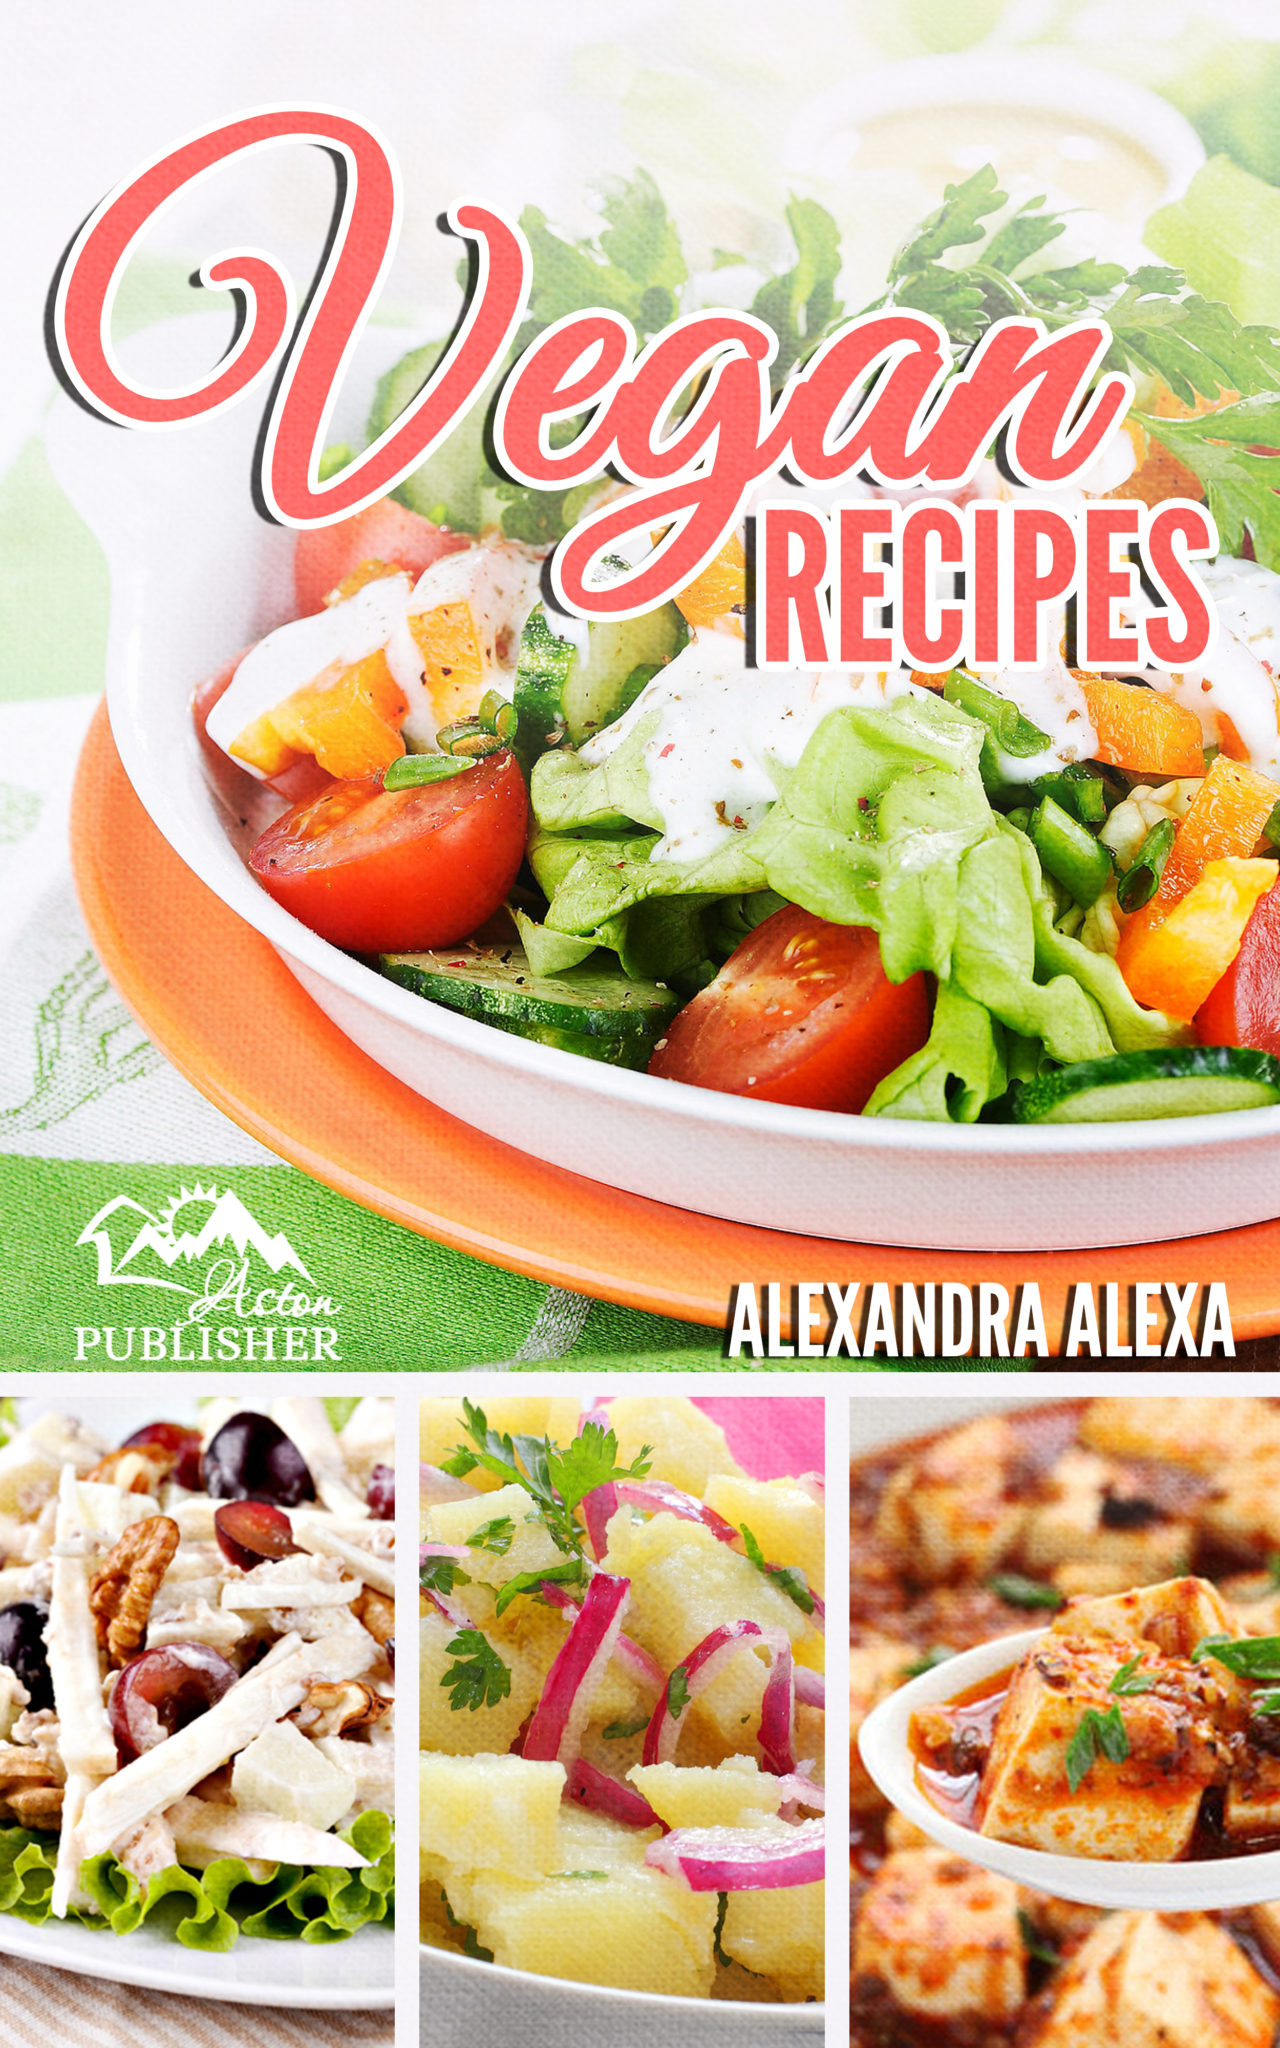 Vegan recipes by Alexandra Alexa